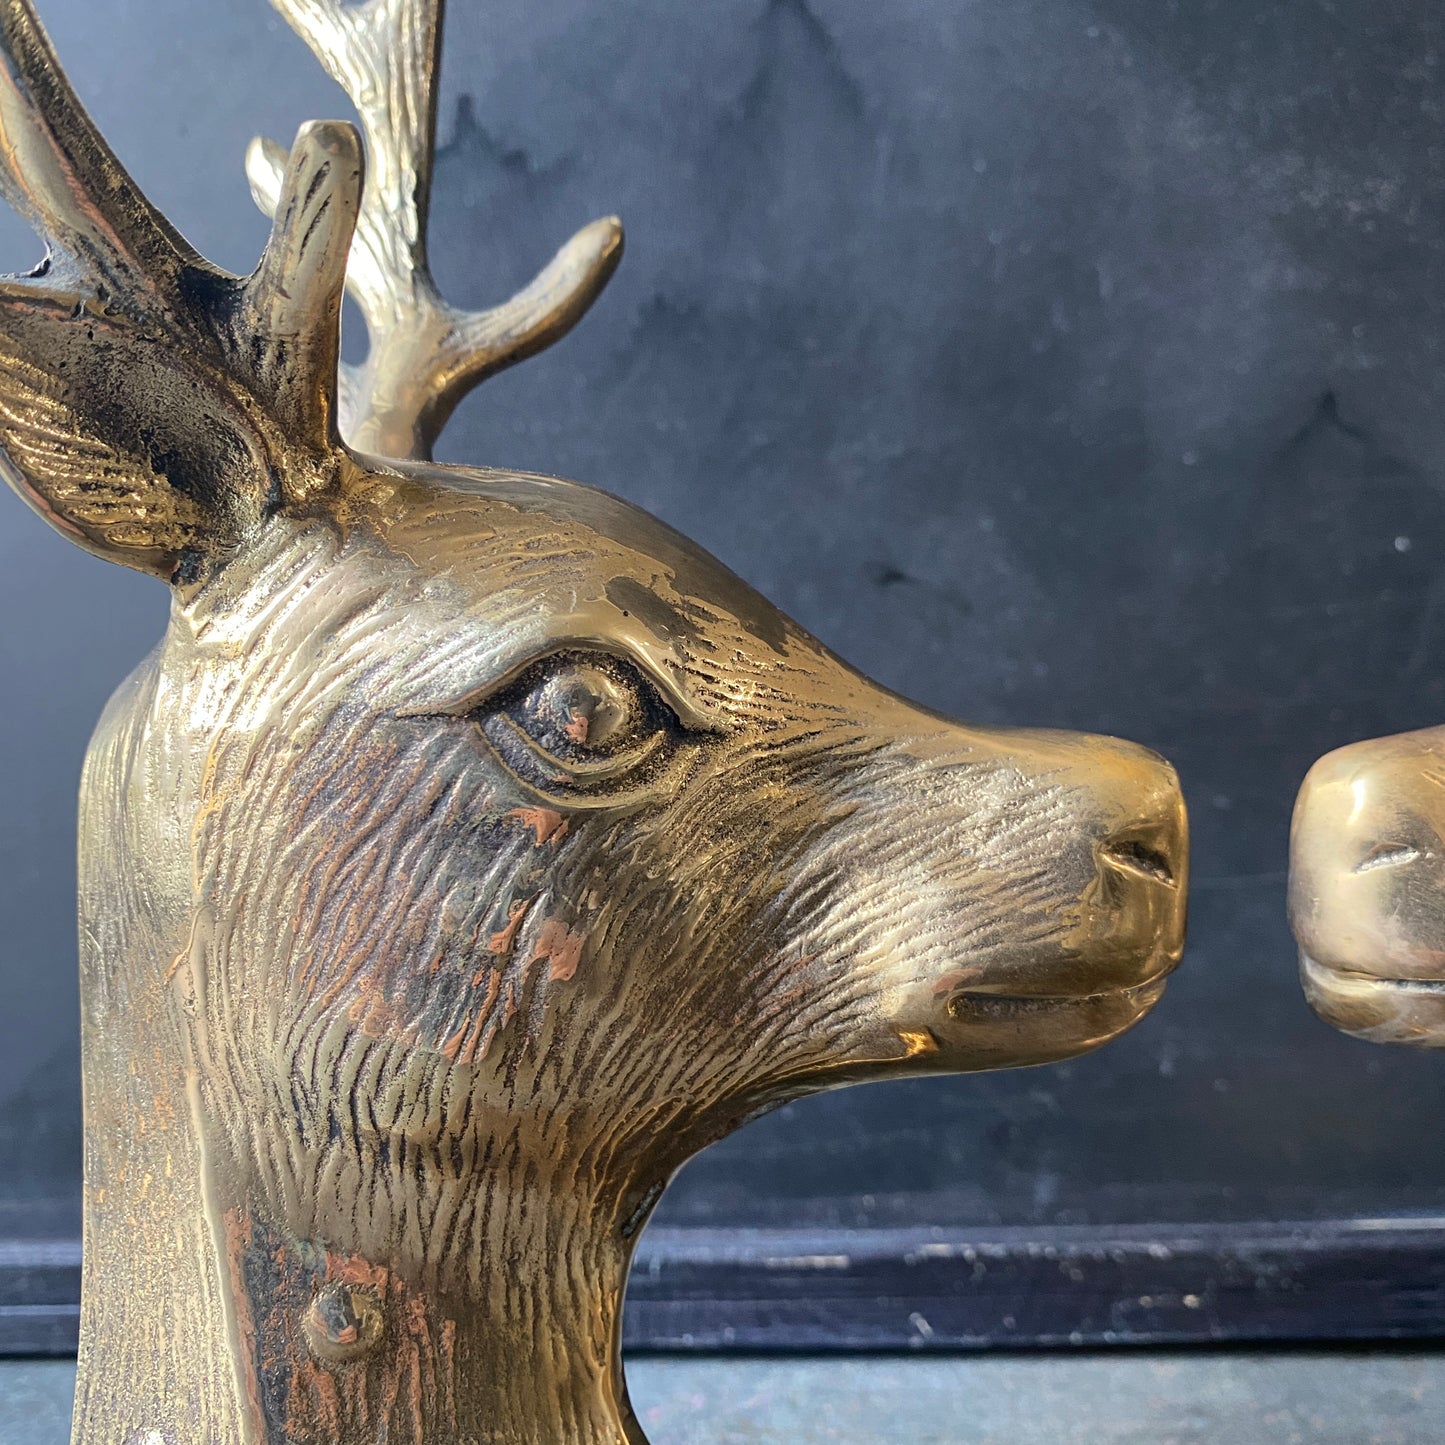 Vintage Brass Deer Bookends